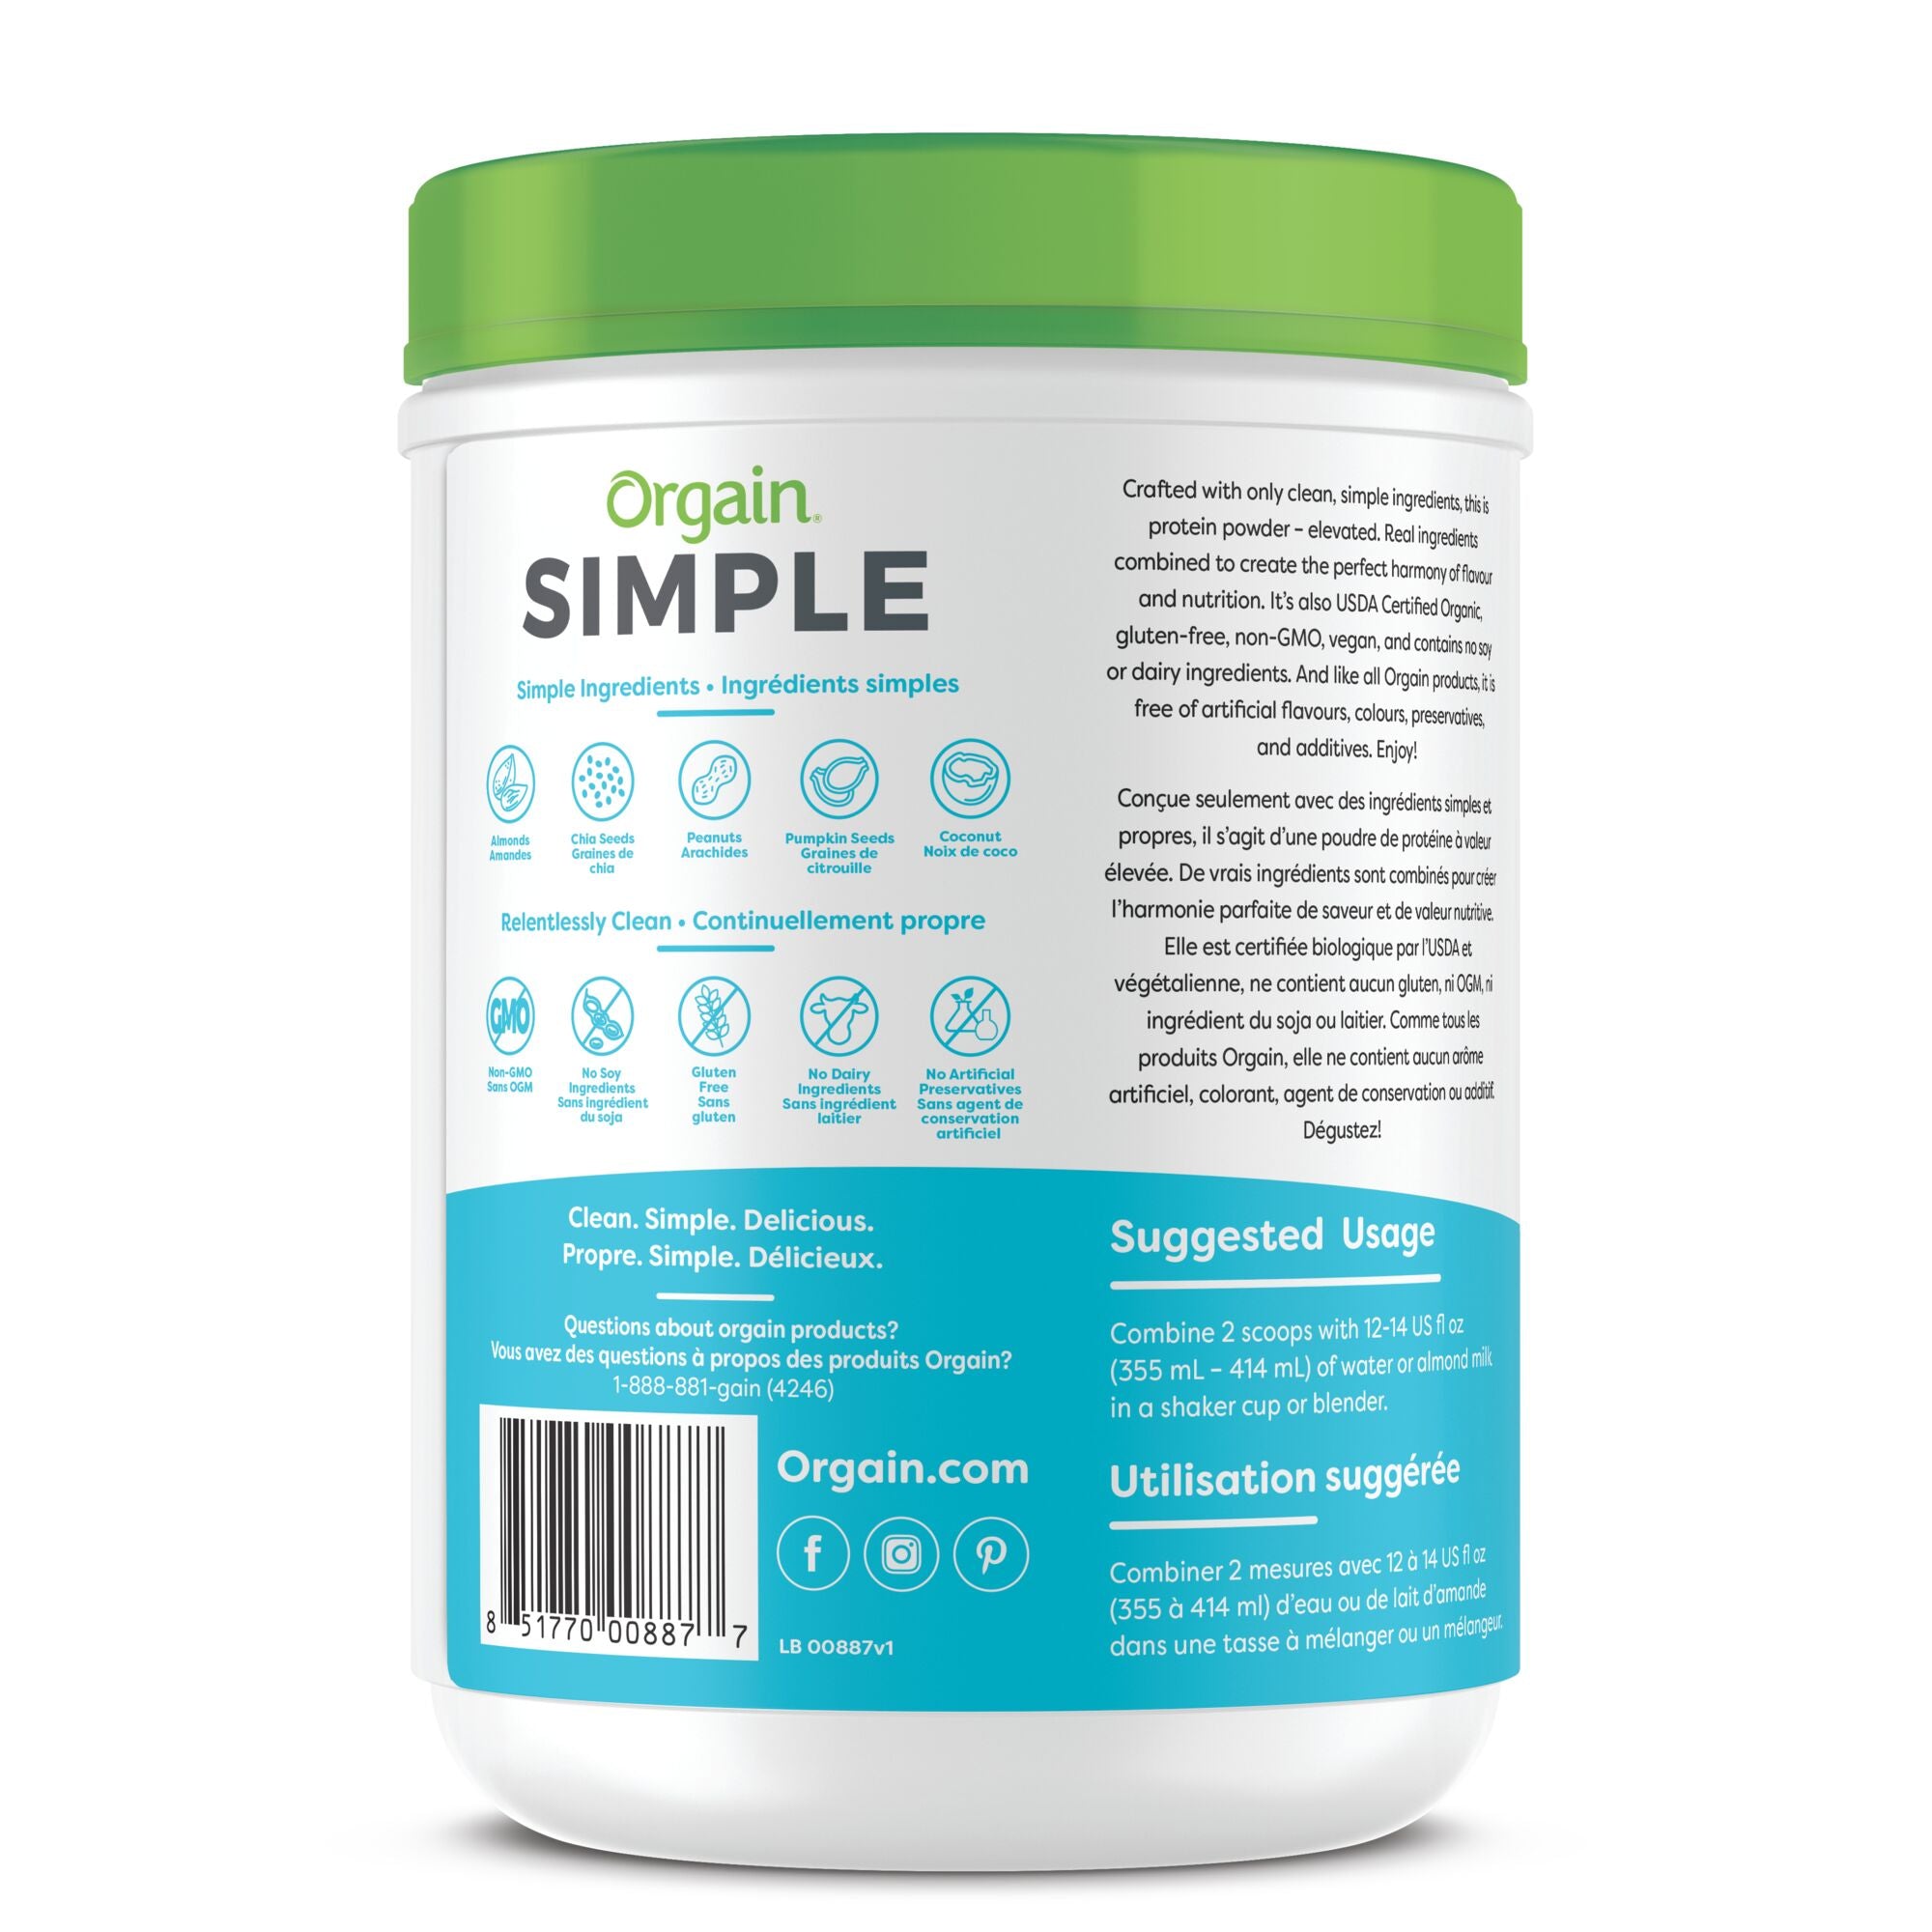 Orgain  Simple Organic Plant Protein Powder